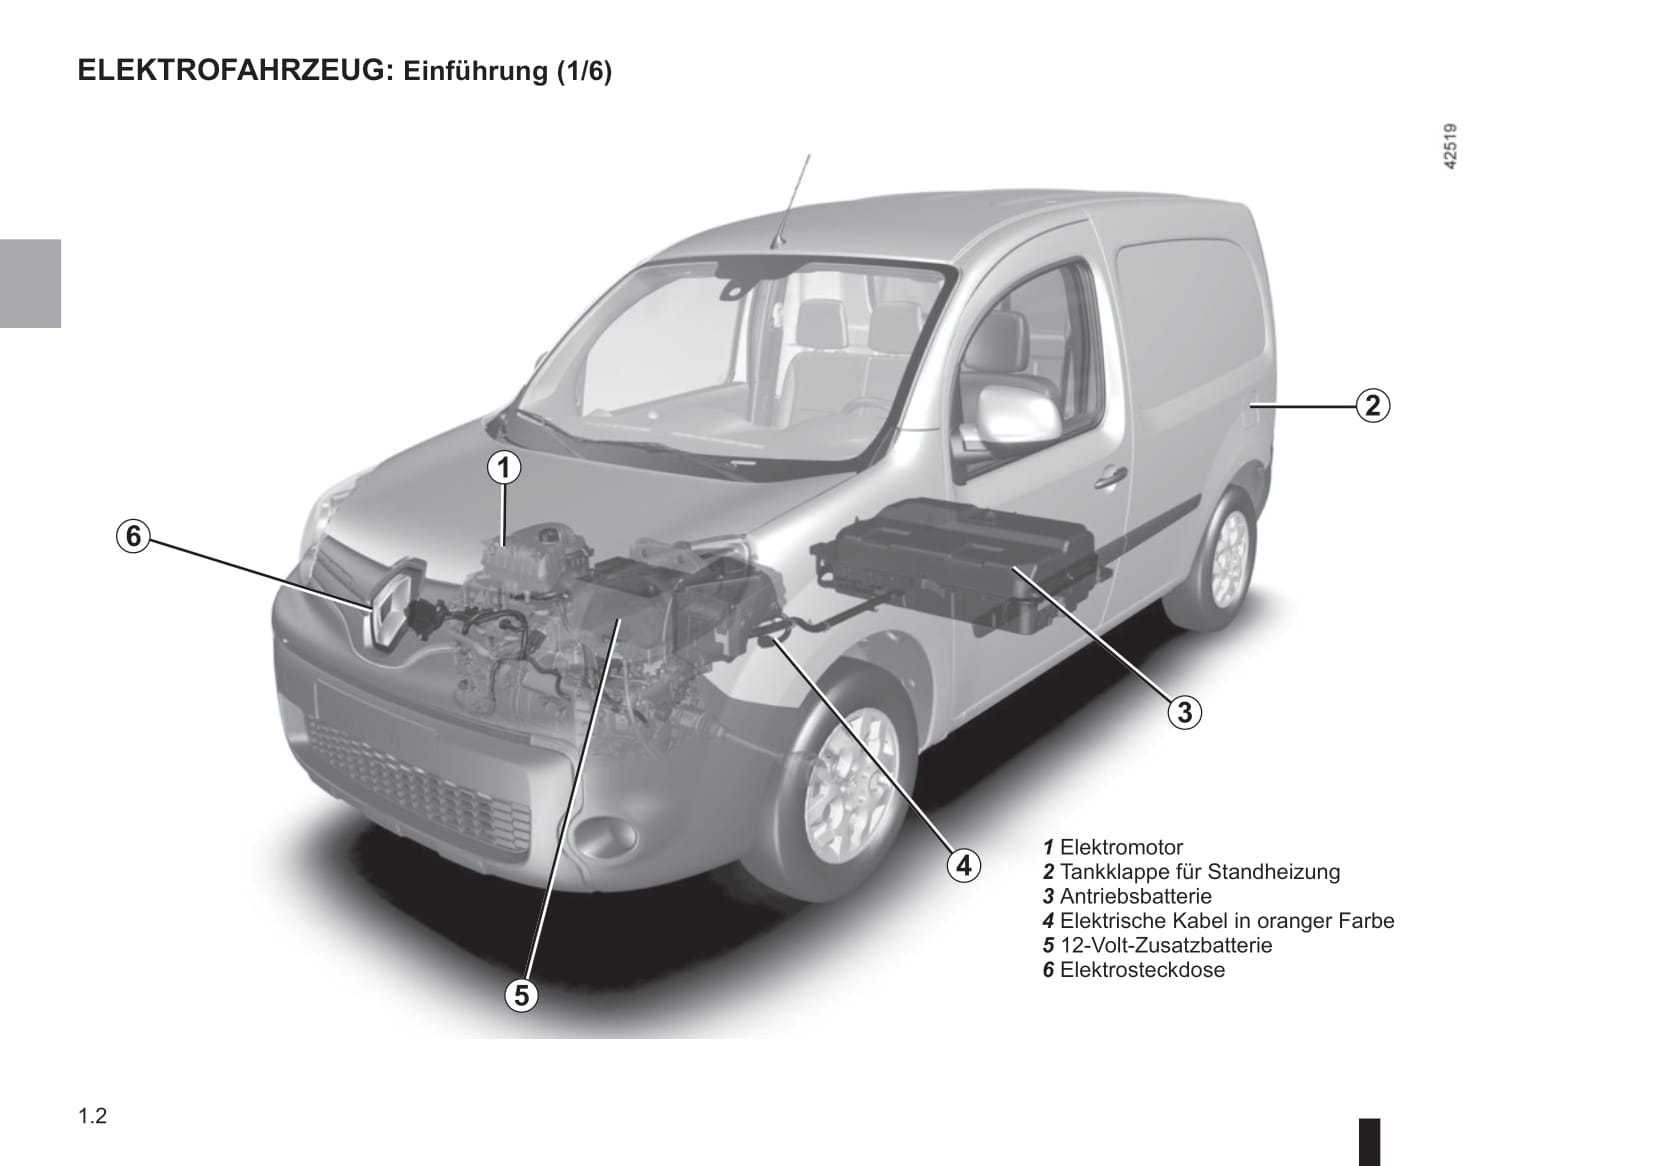 2013-2016 Renault Kangoo Bedienungsanleitung